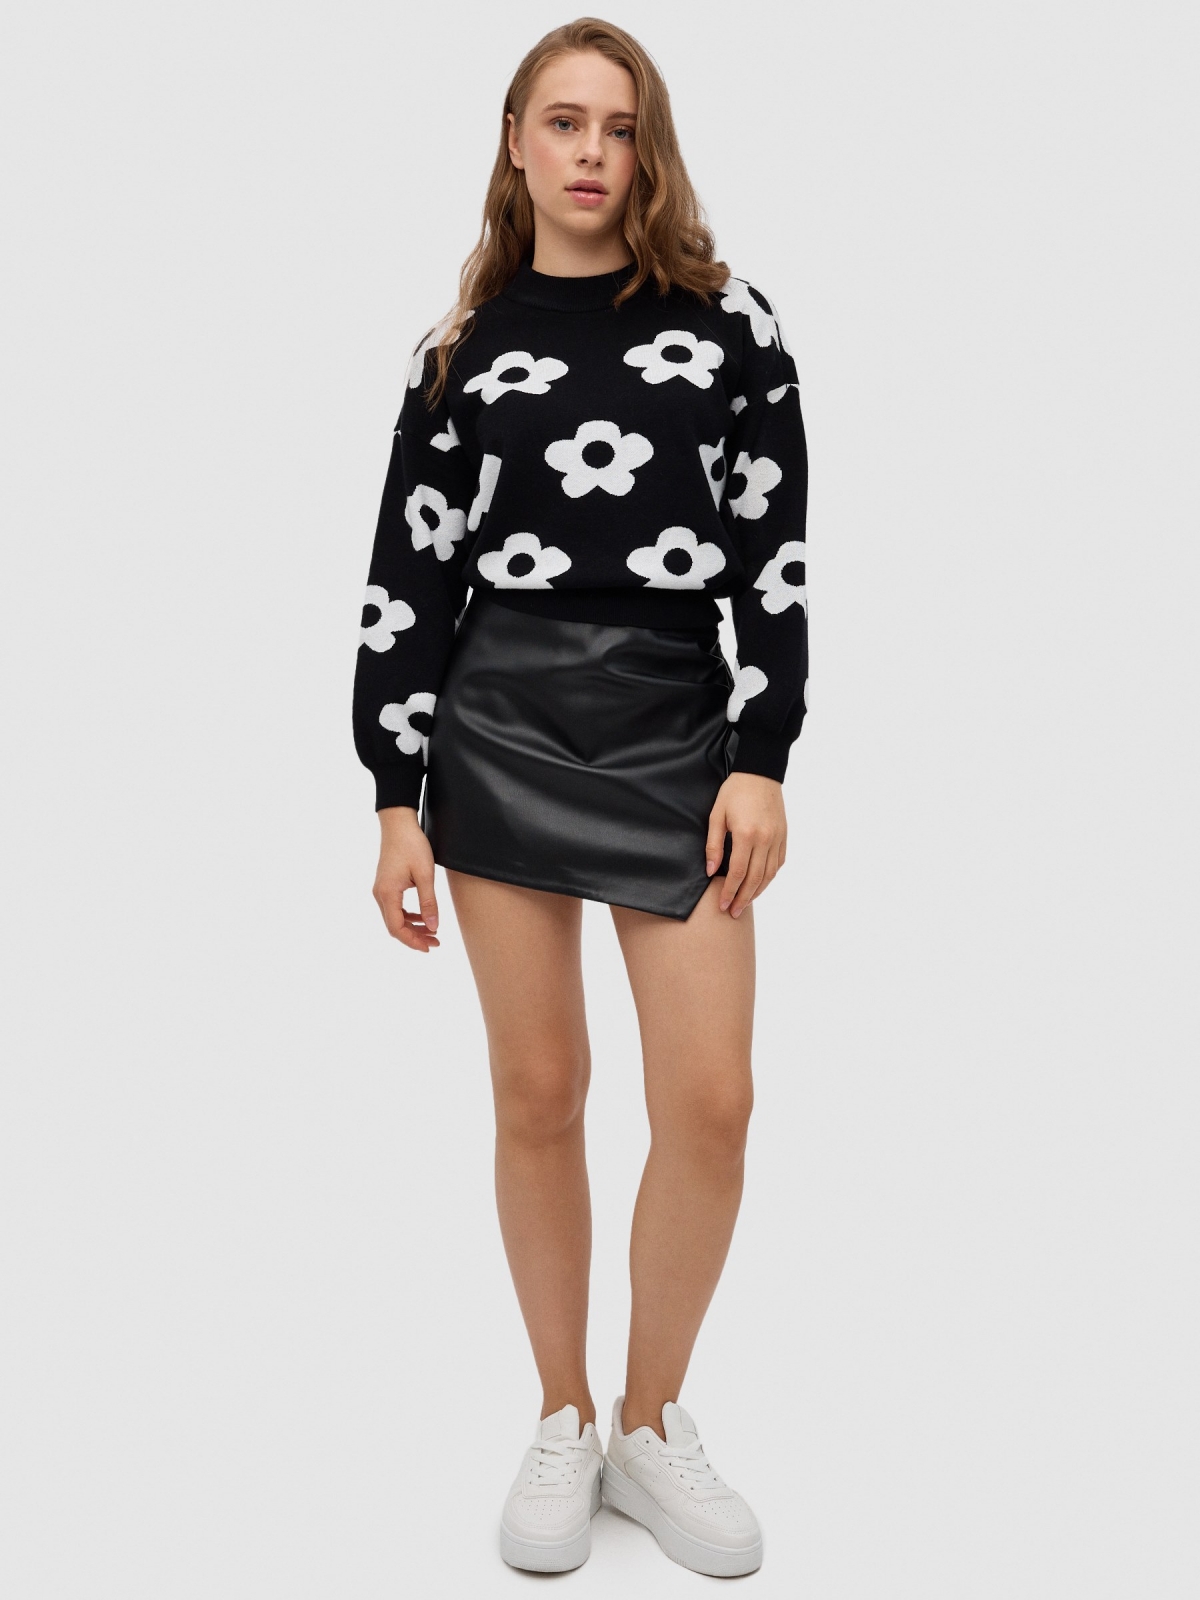 Flower crop print sweater black front view